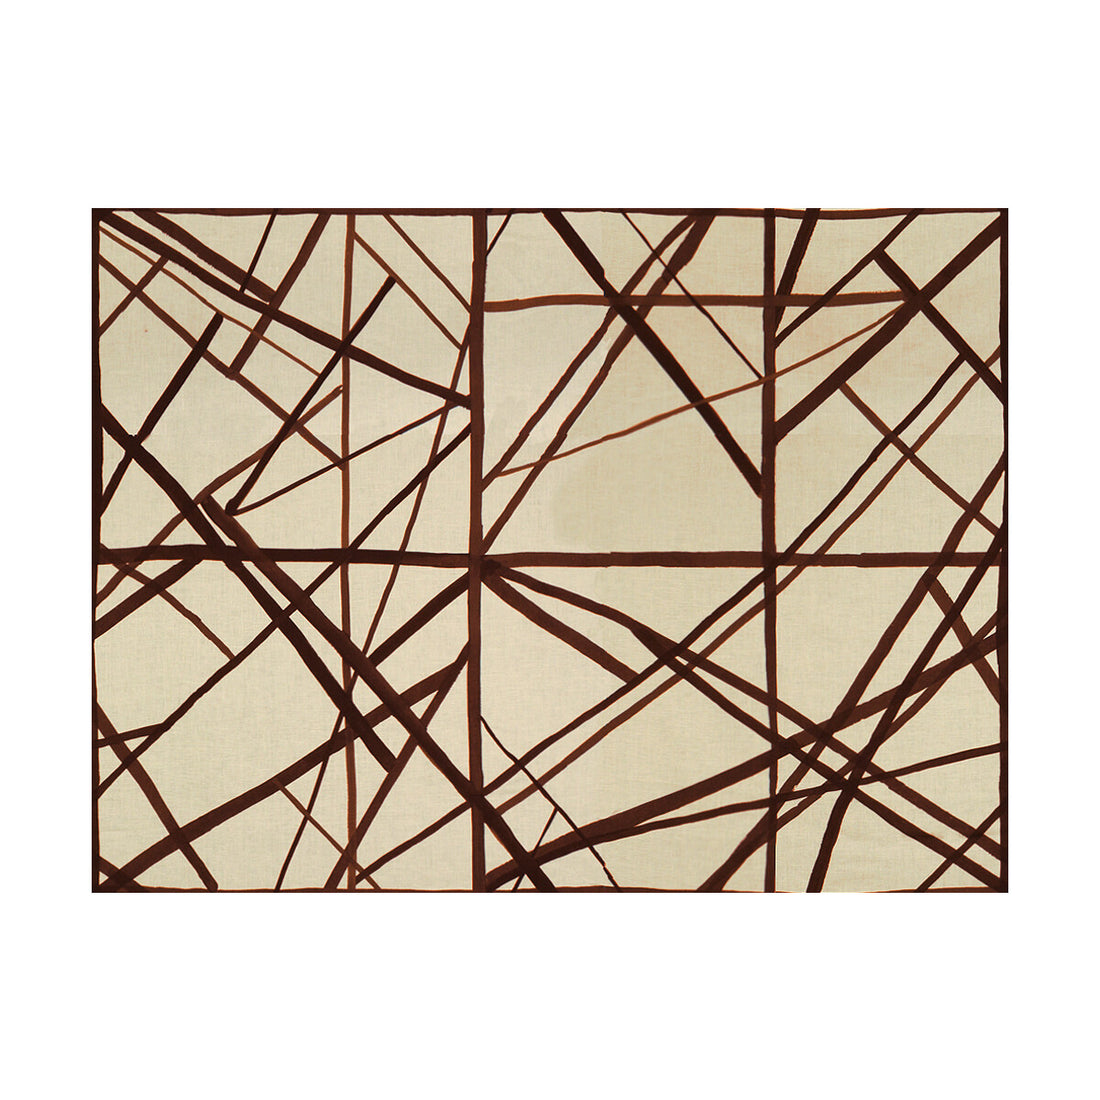 Channels fabric in plum/oatmeal color - pattern GWF-3101.911.0 - by Lee Jofa Modern in the Kelly Wearstler II collection